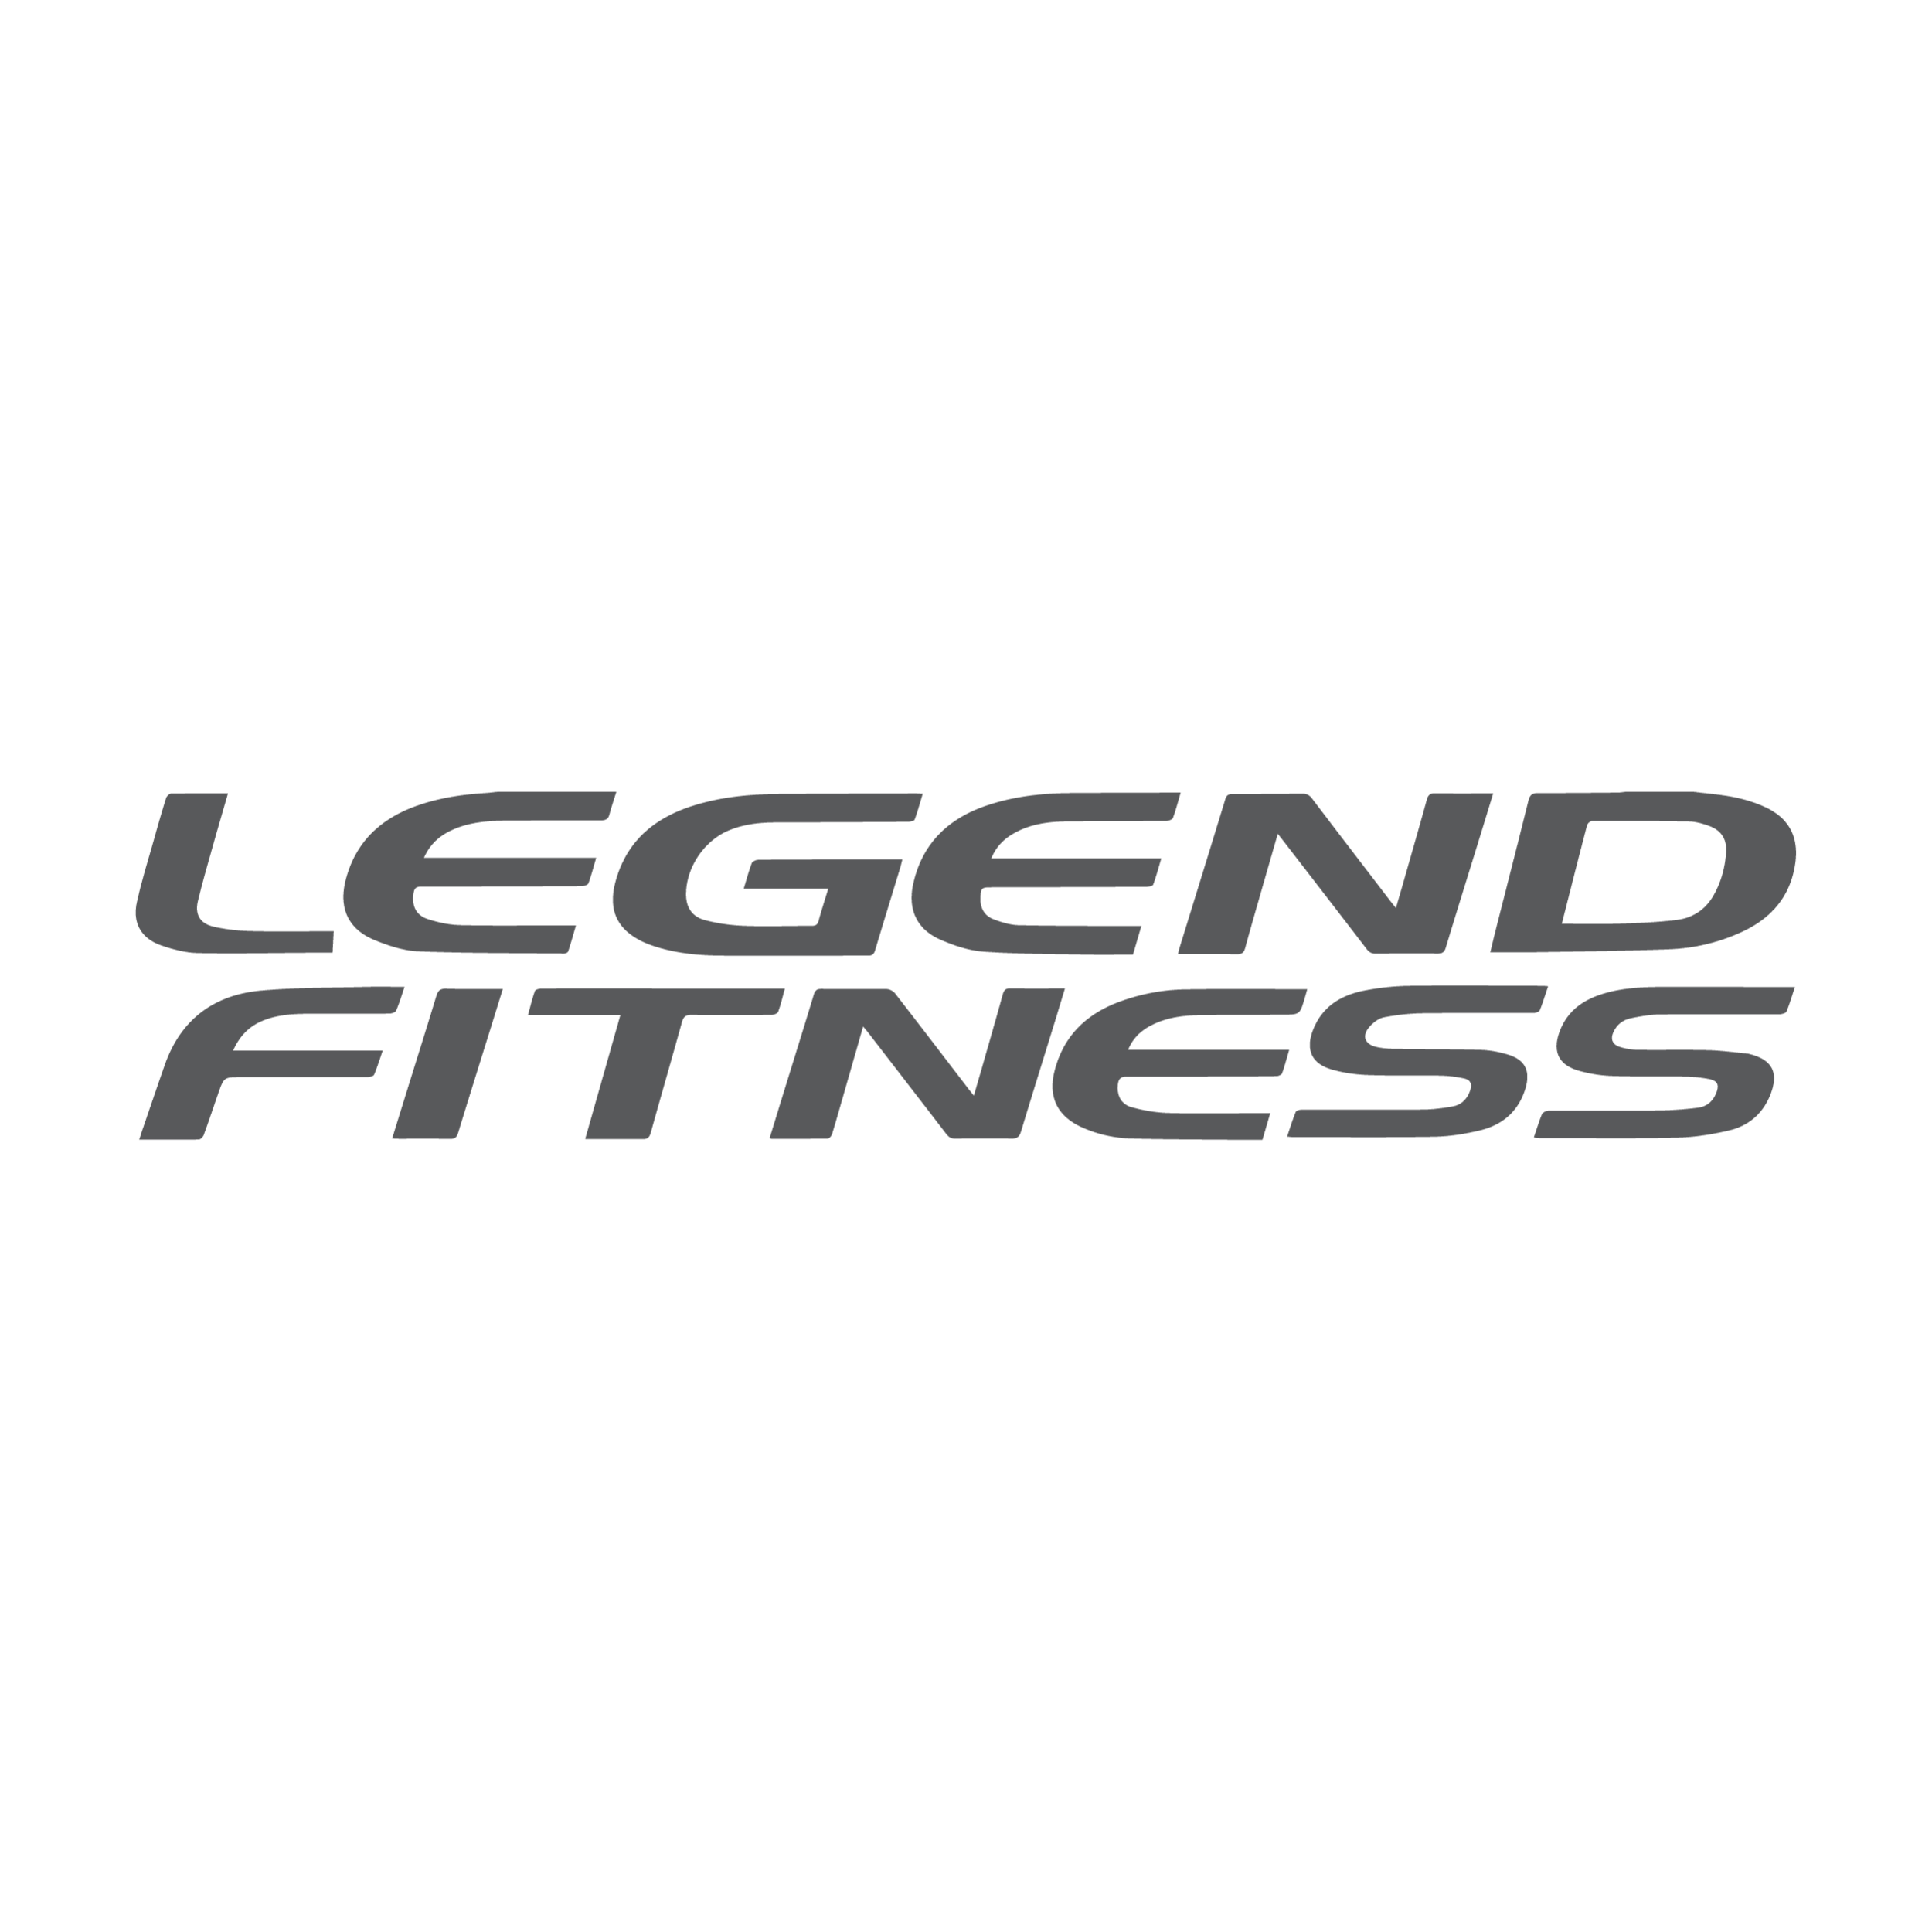 LegendFitness_Logo.png